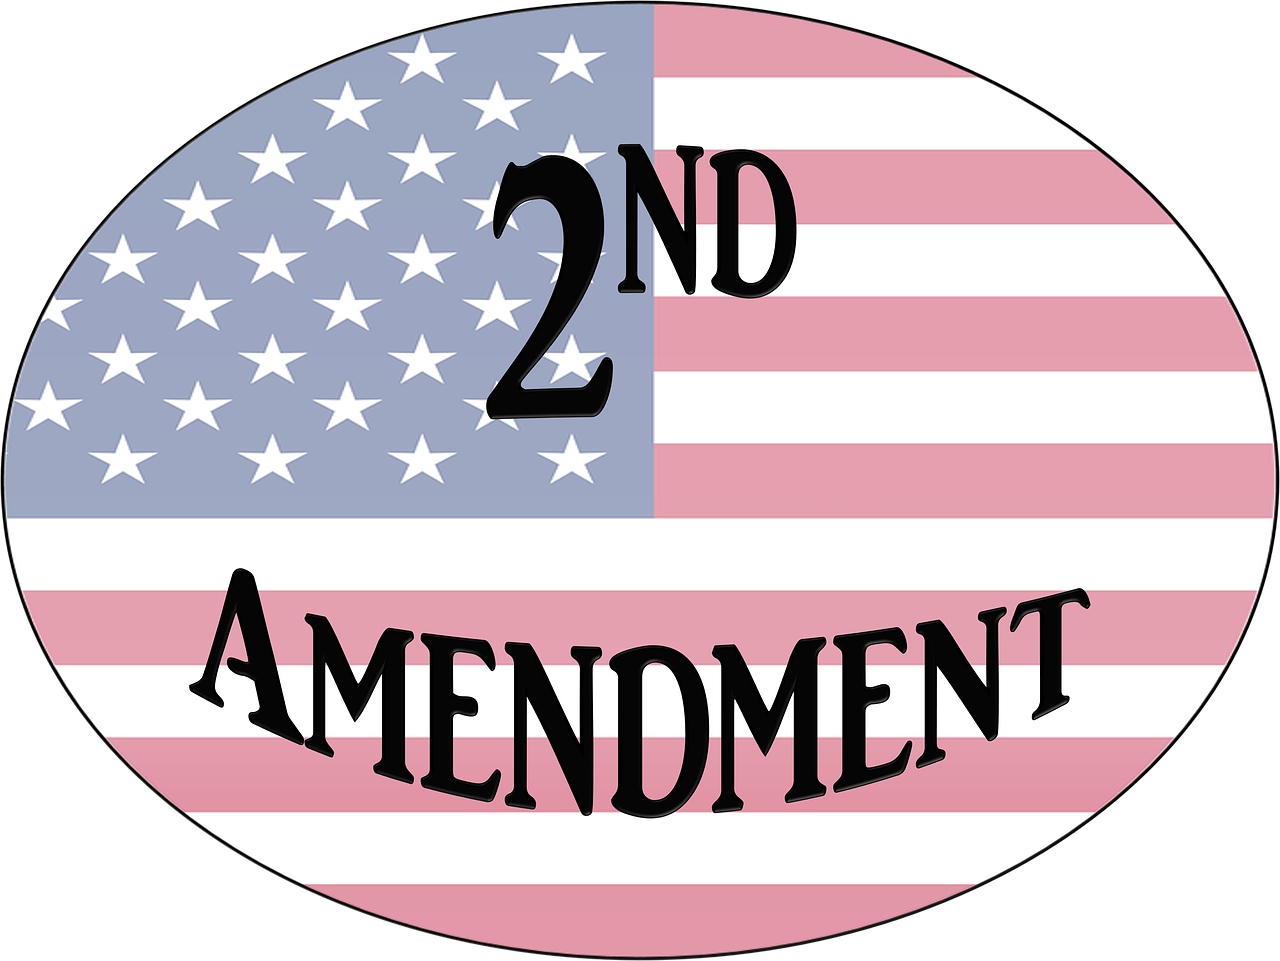 guns 2nd amendment second amendment free photo